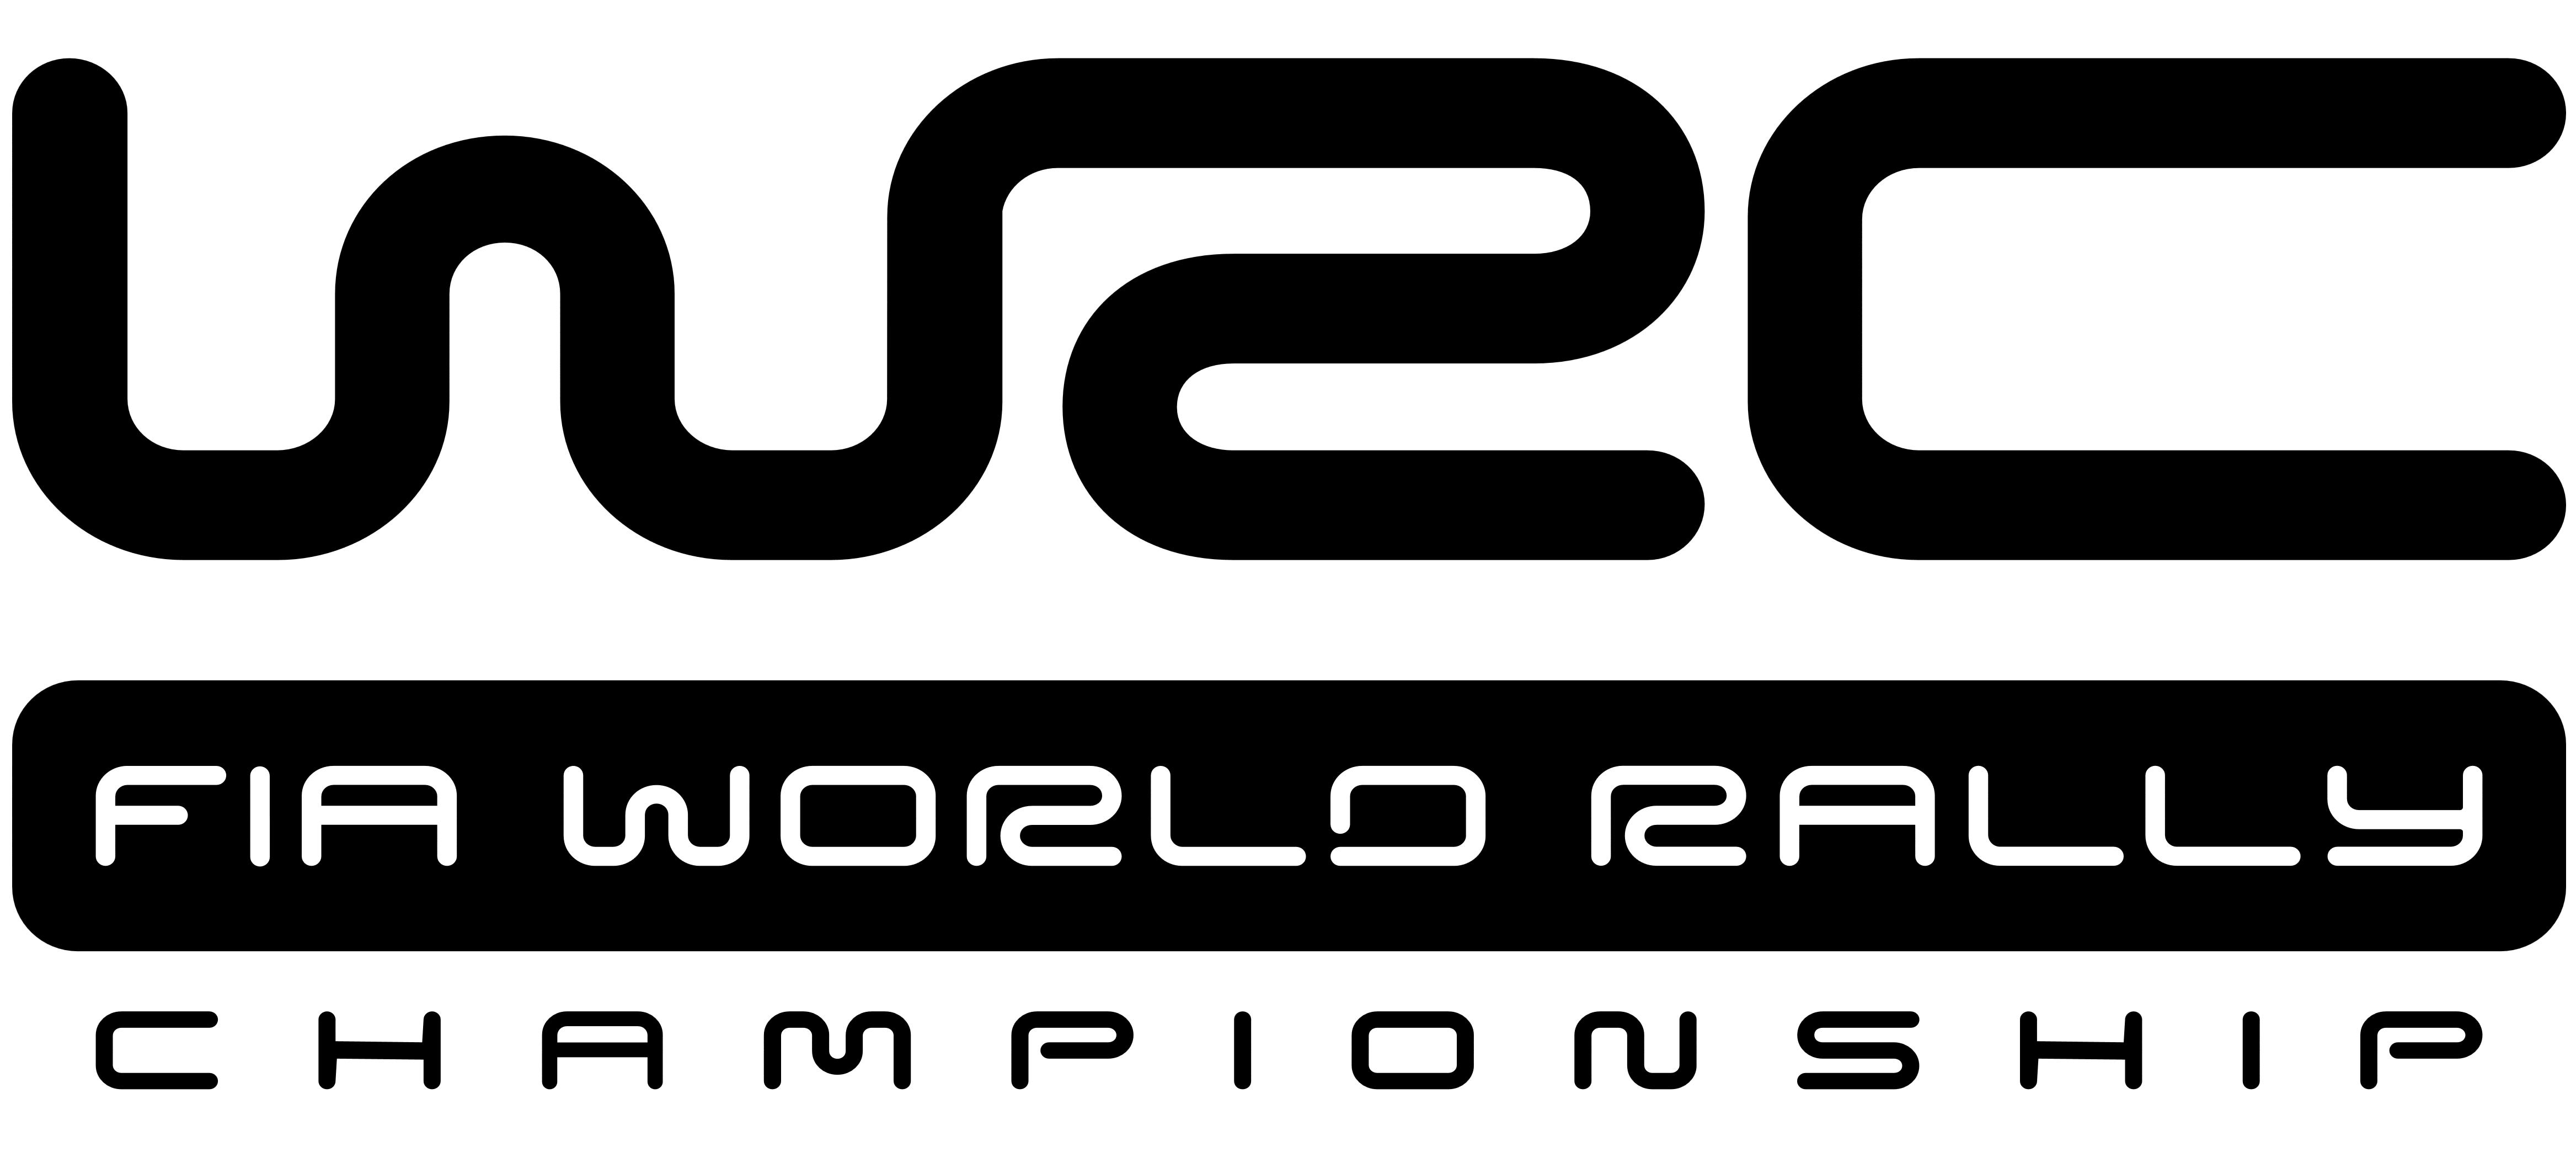 WRC logo, logotype